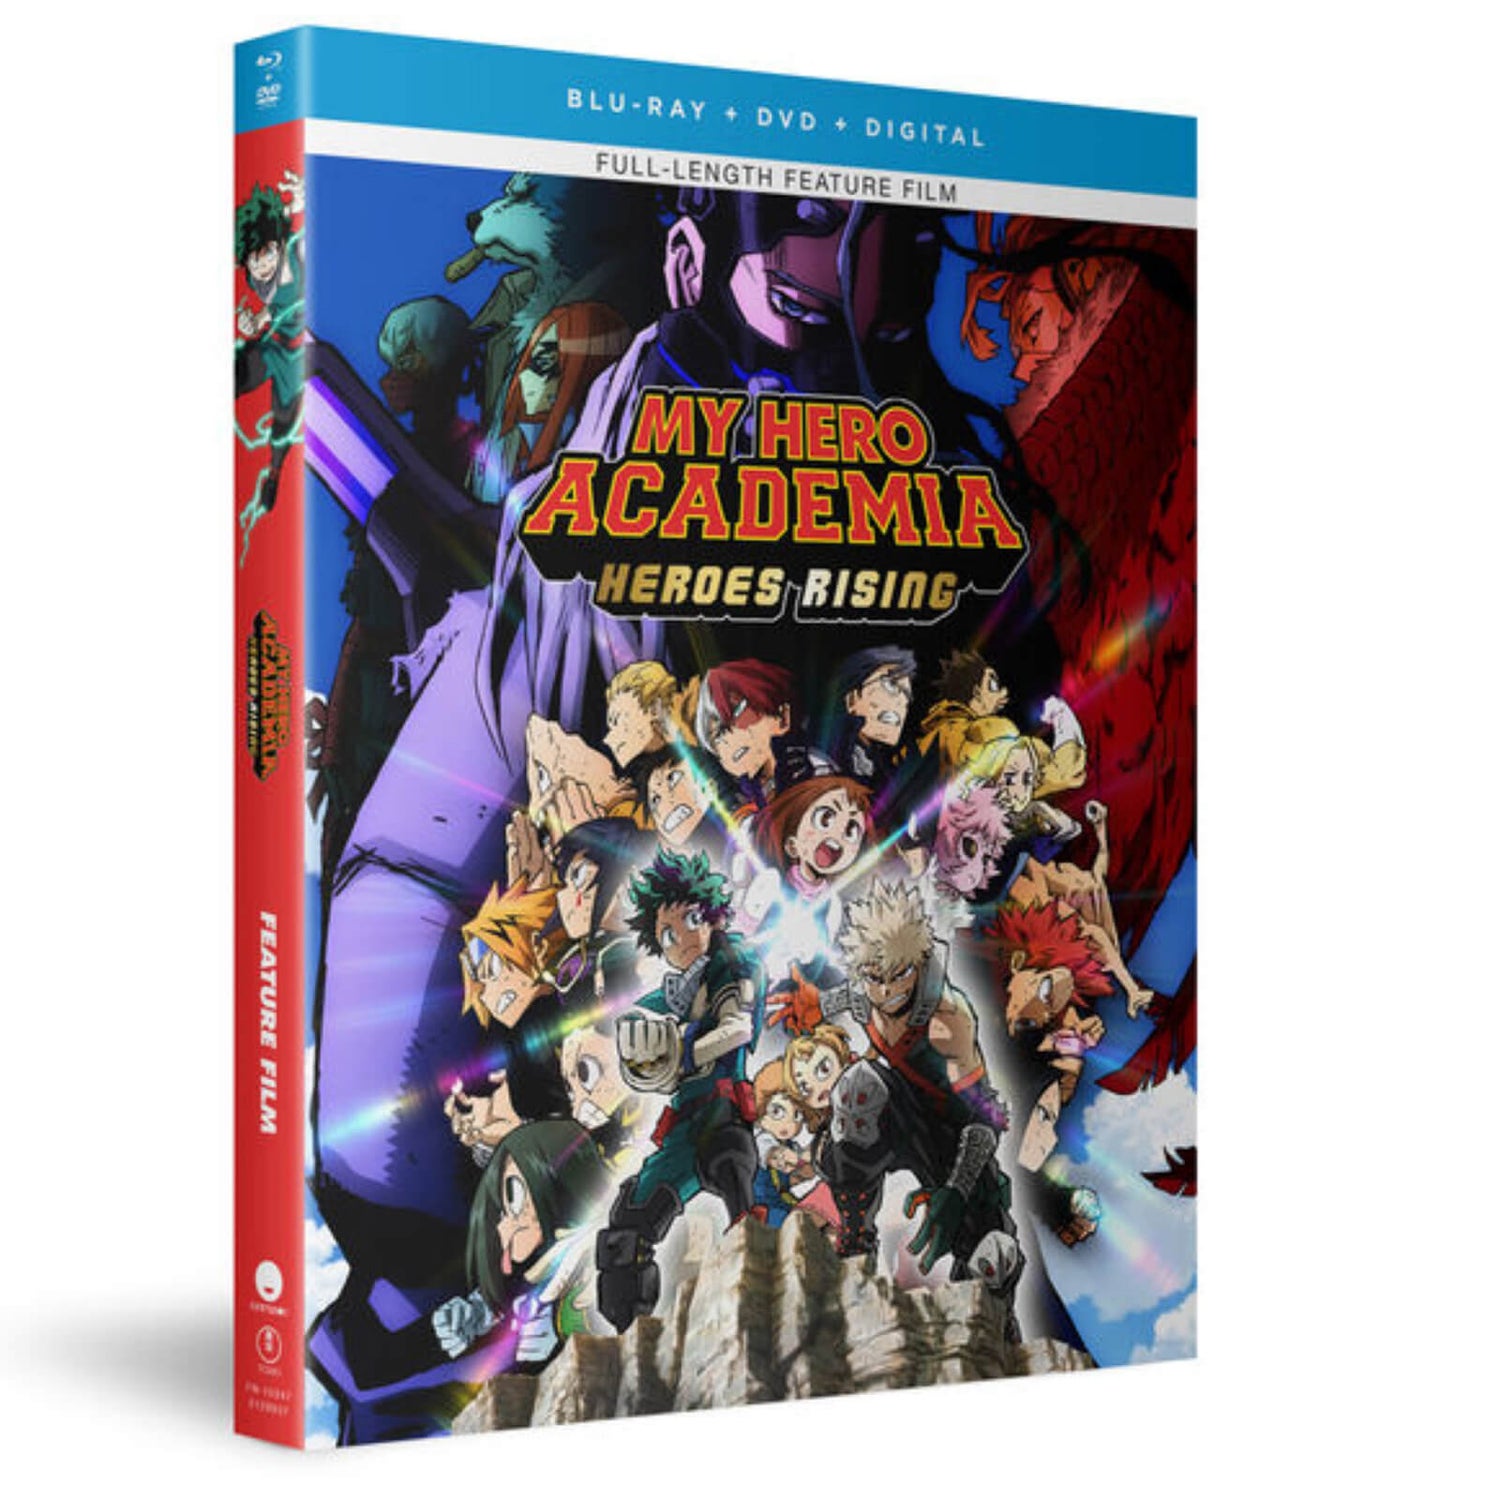 My Hero Academia: Heroes Rising (Includes DVD)